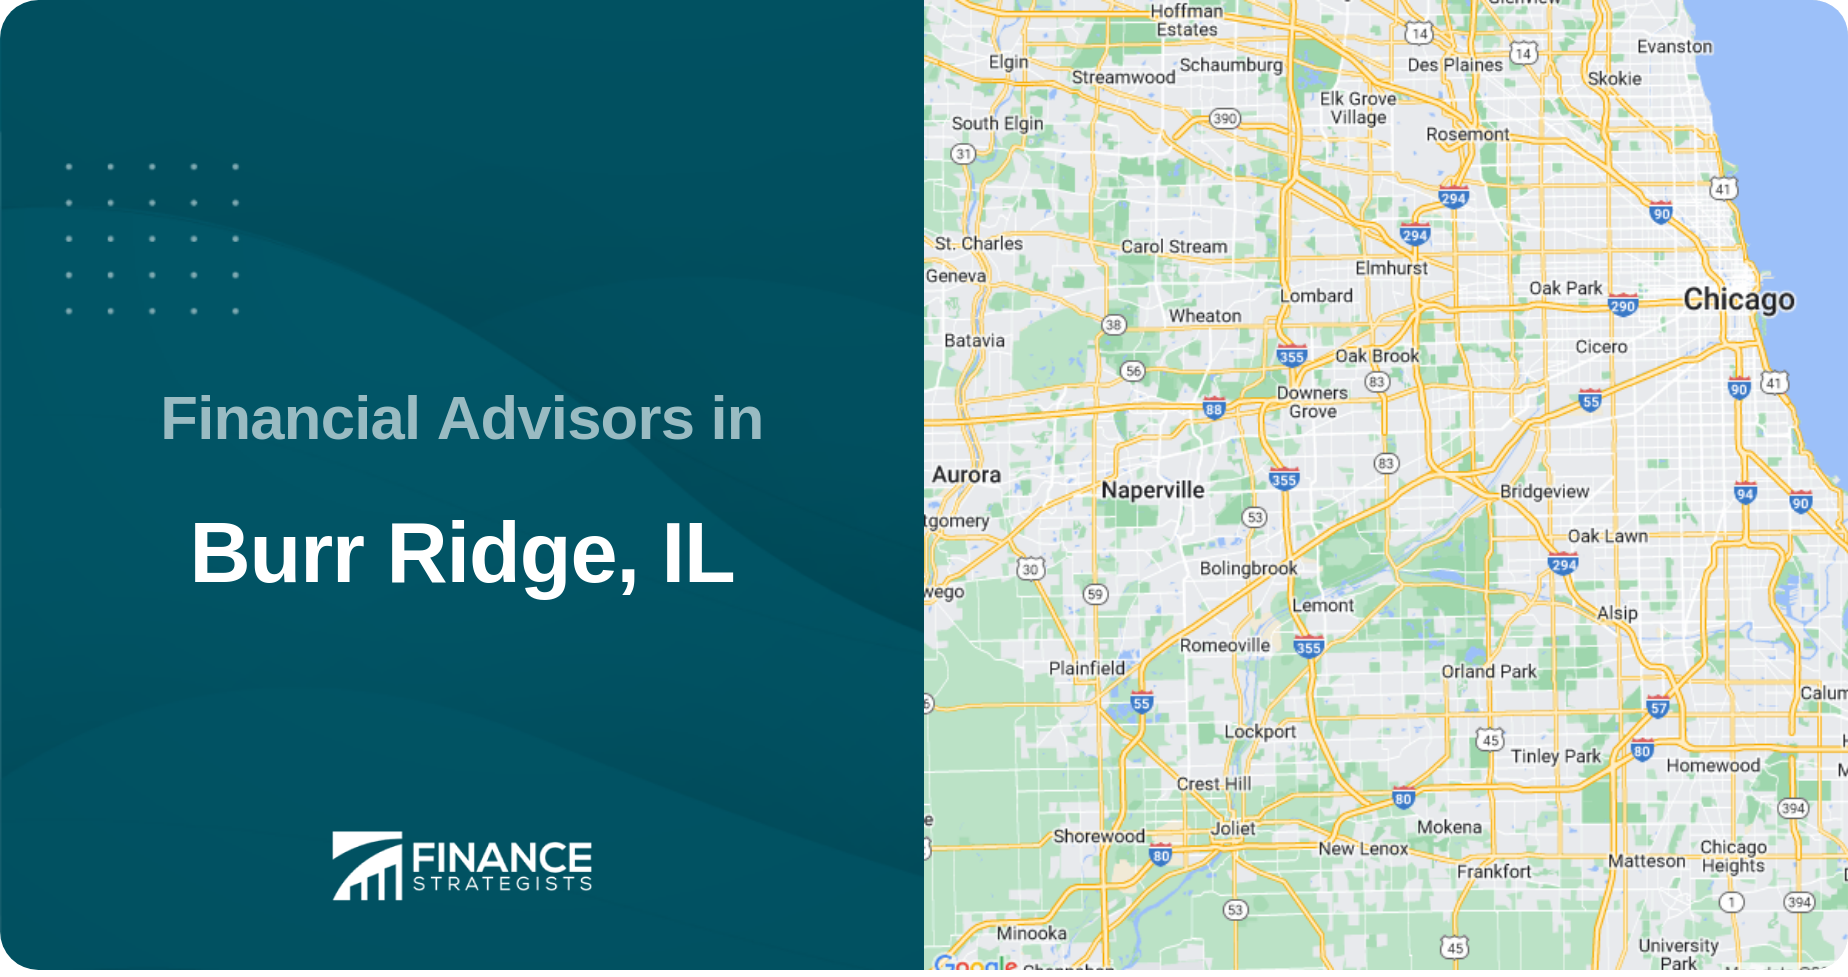 Financial Advisors in Burr Ridge, IL